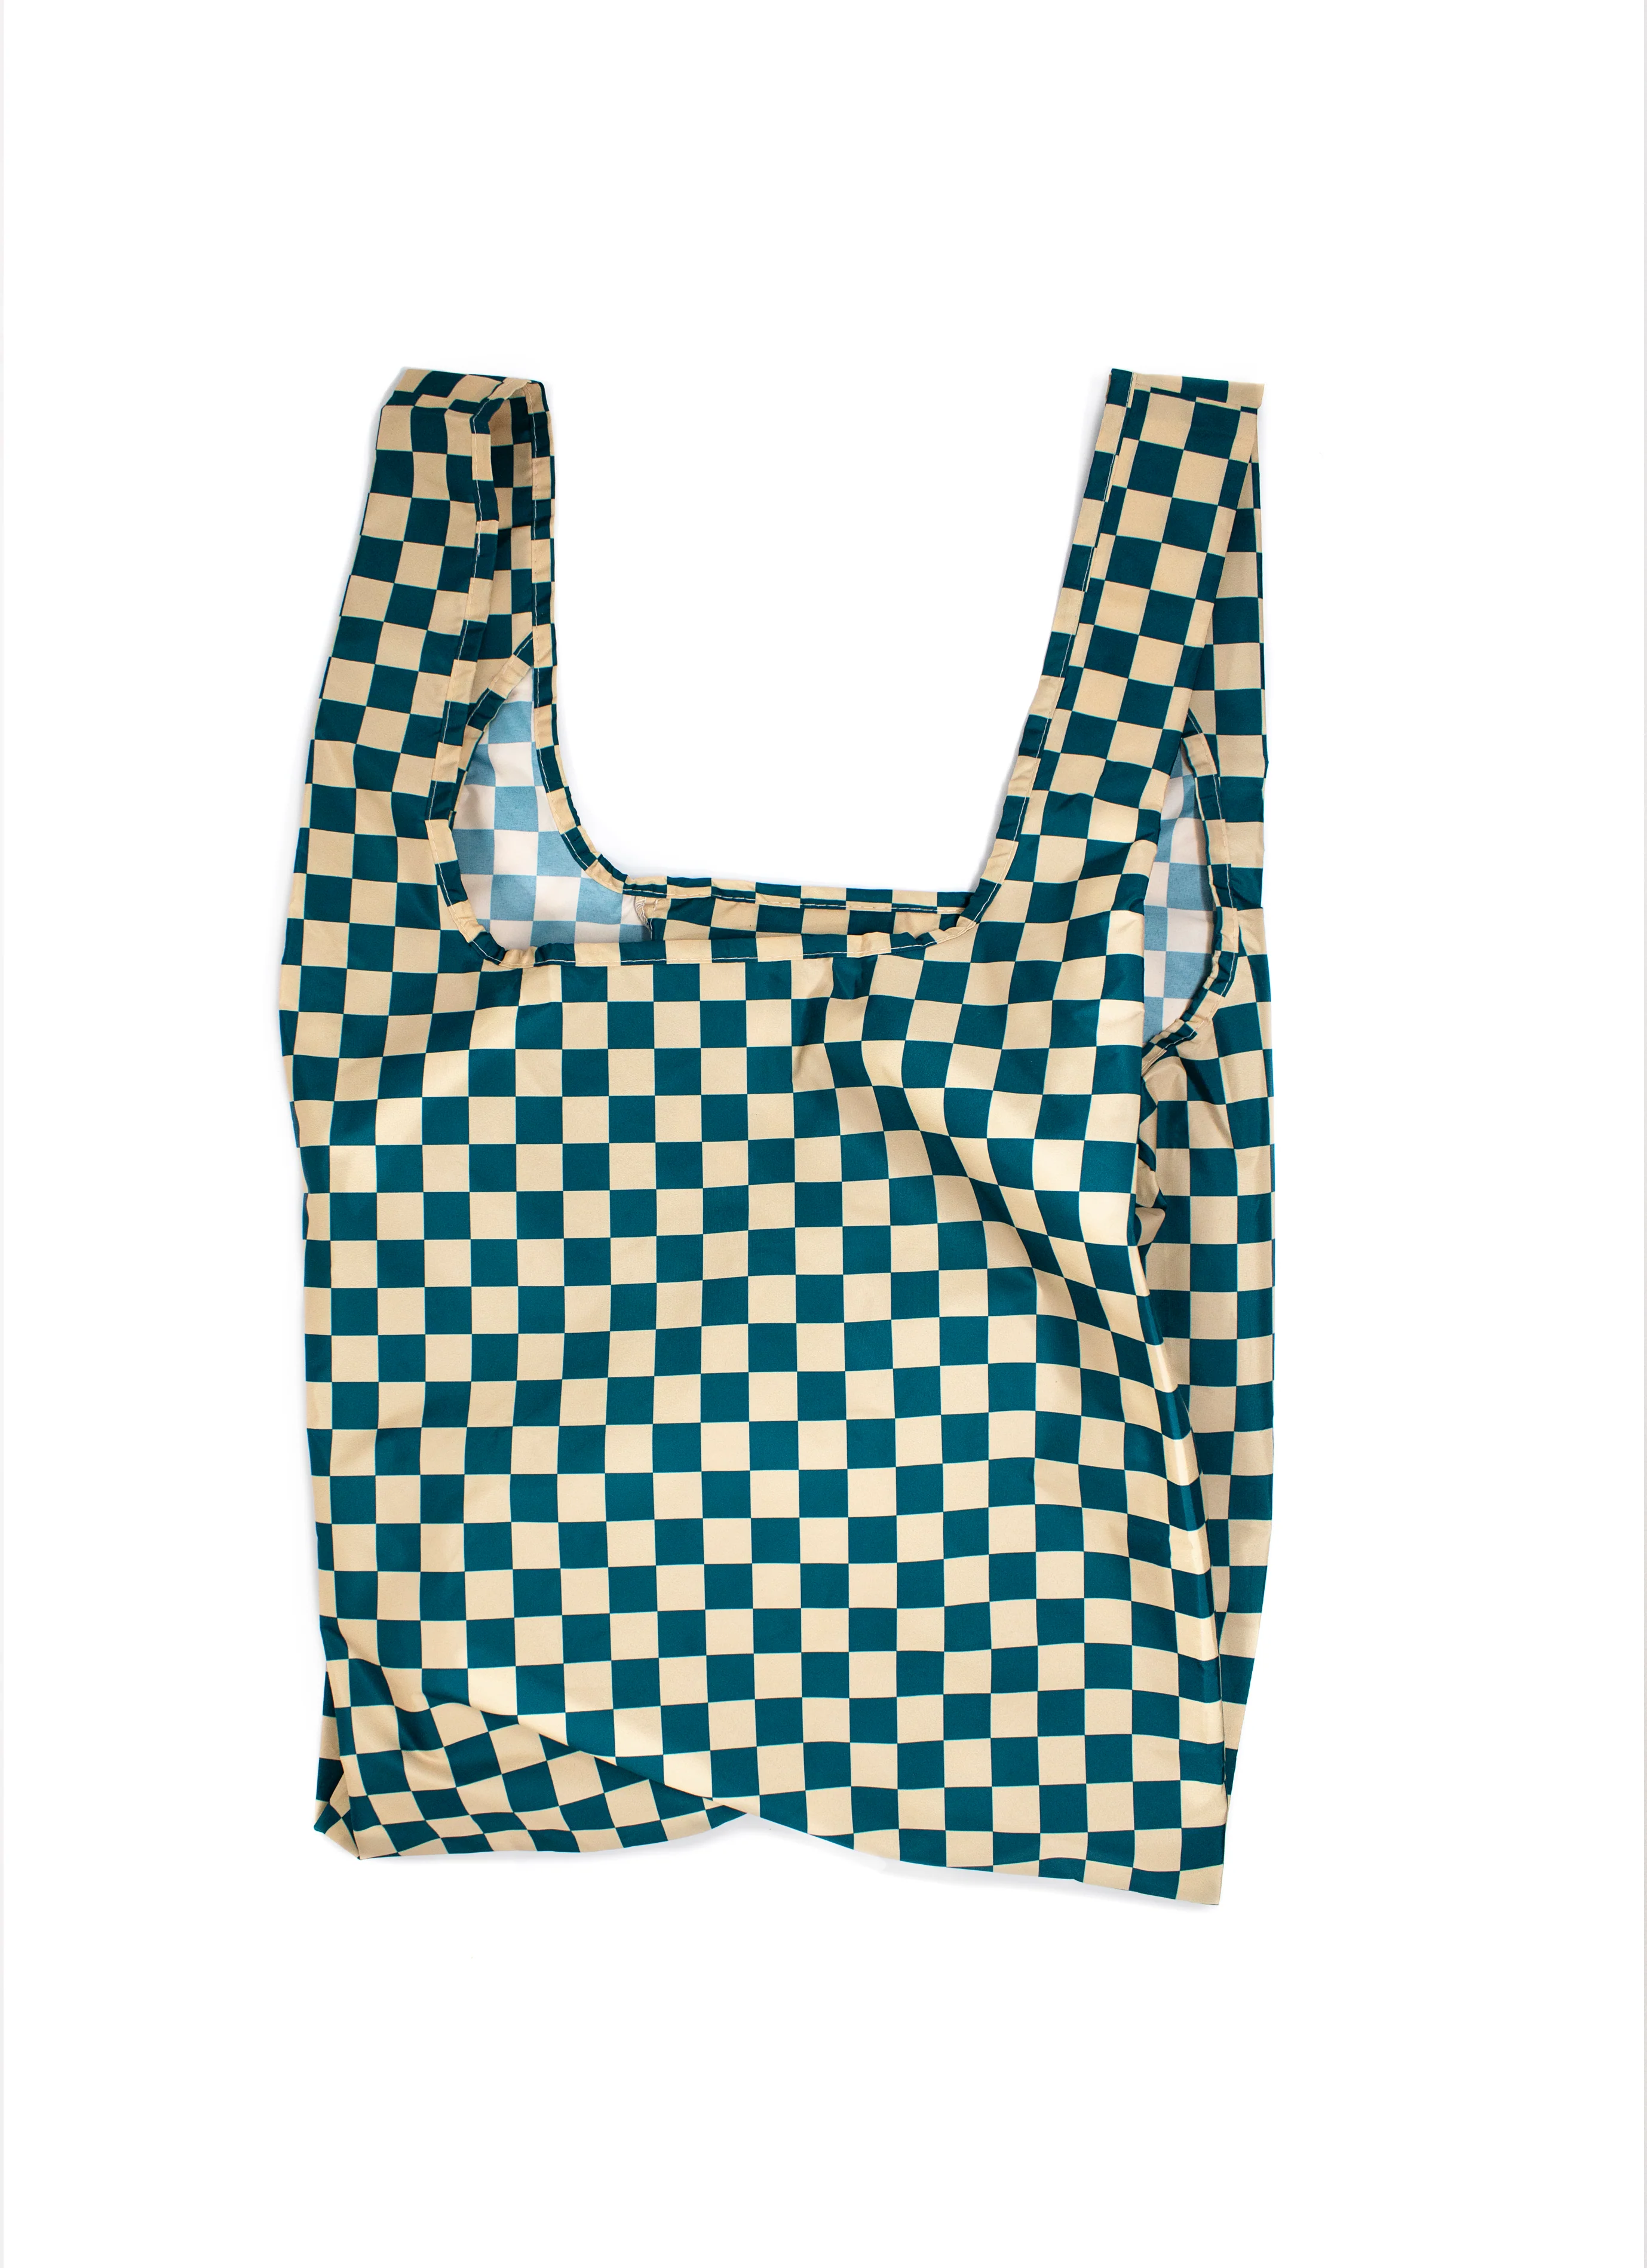 Kind Bag Reusable Medium Shopping Bag - Teal Checkerboard